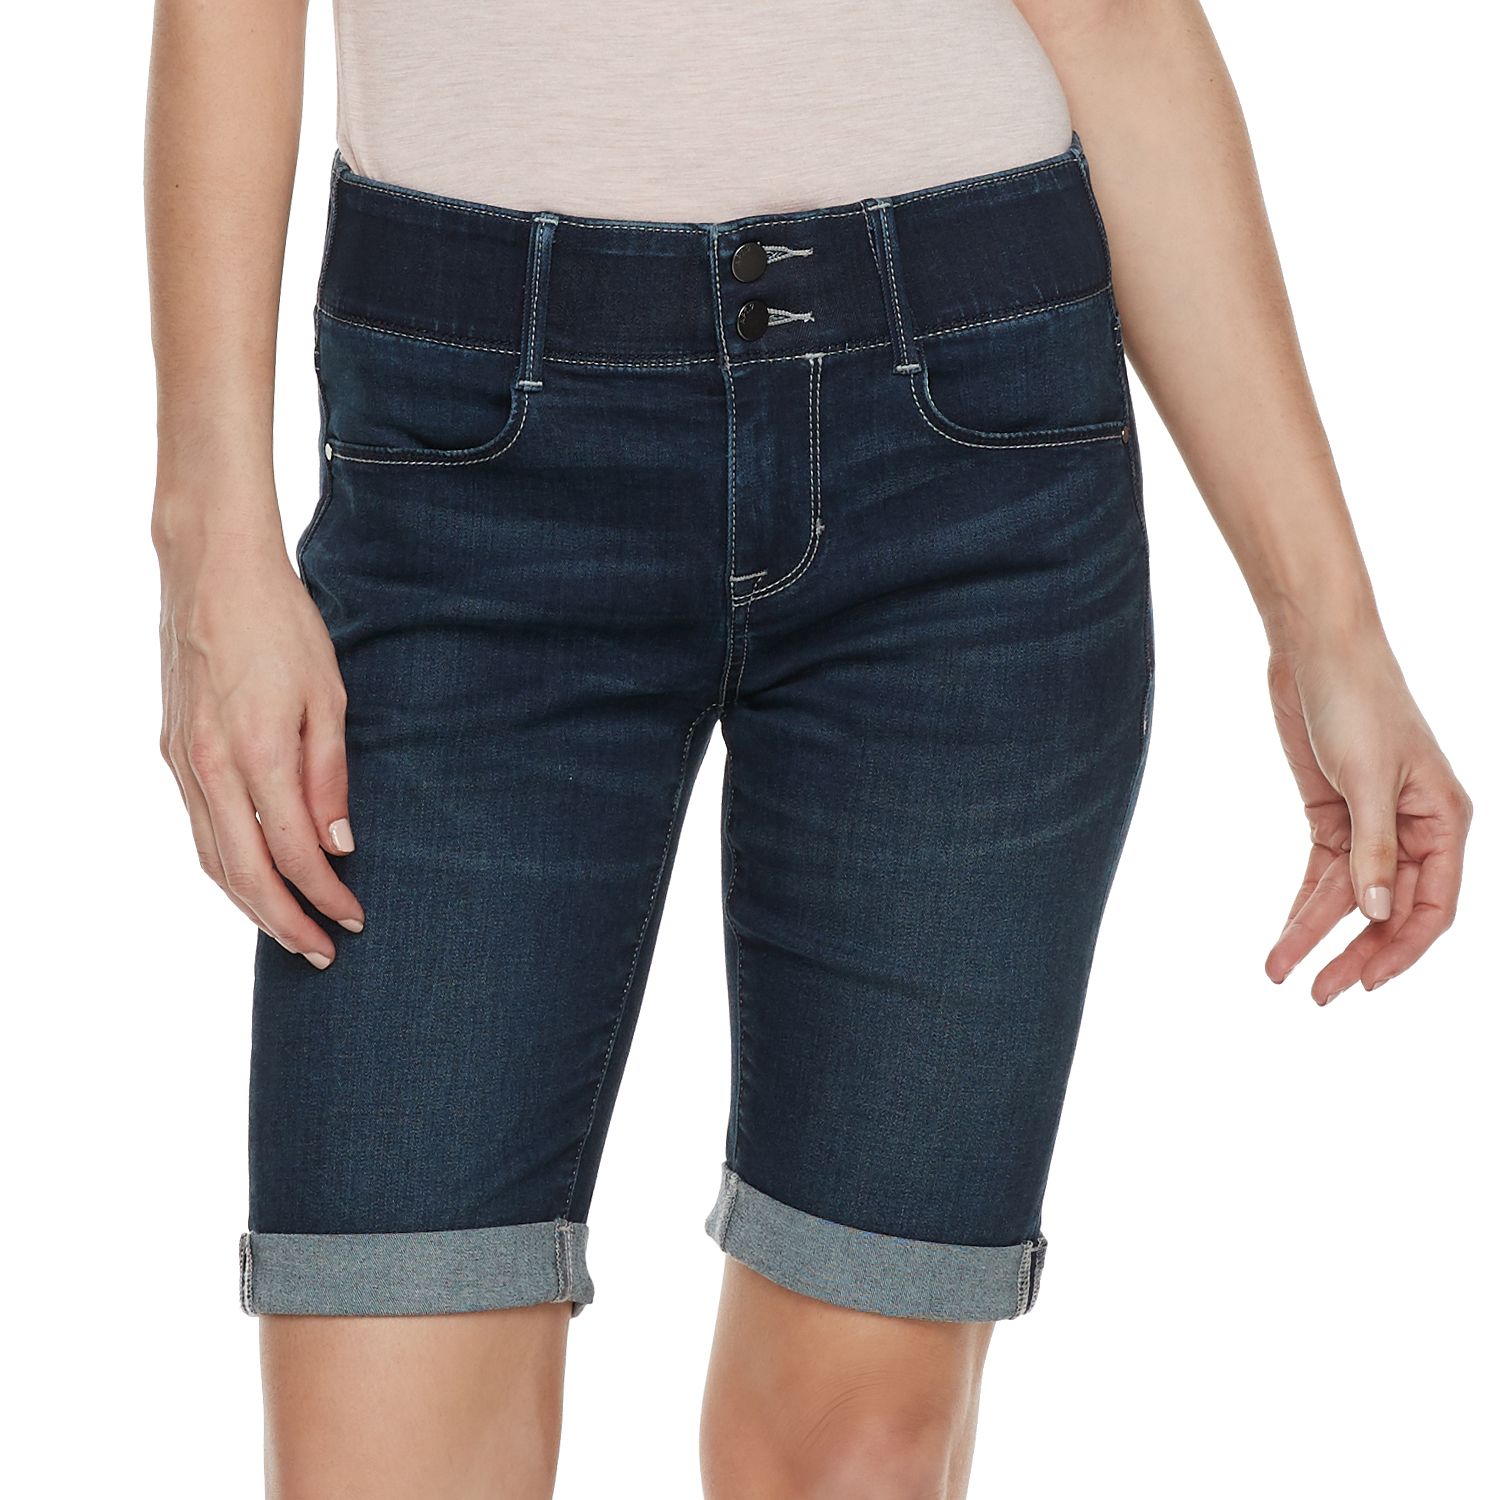 tummy control jean shorts